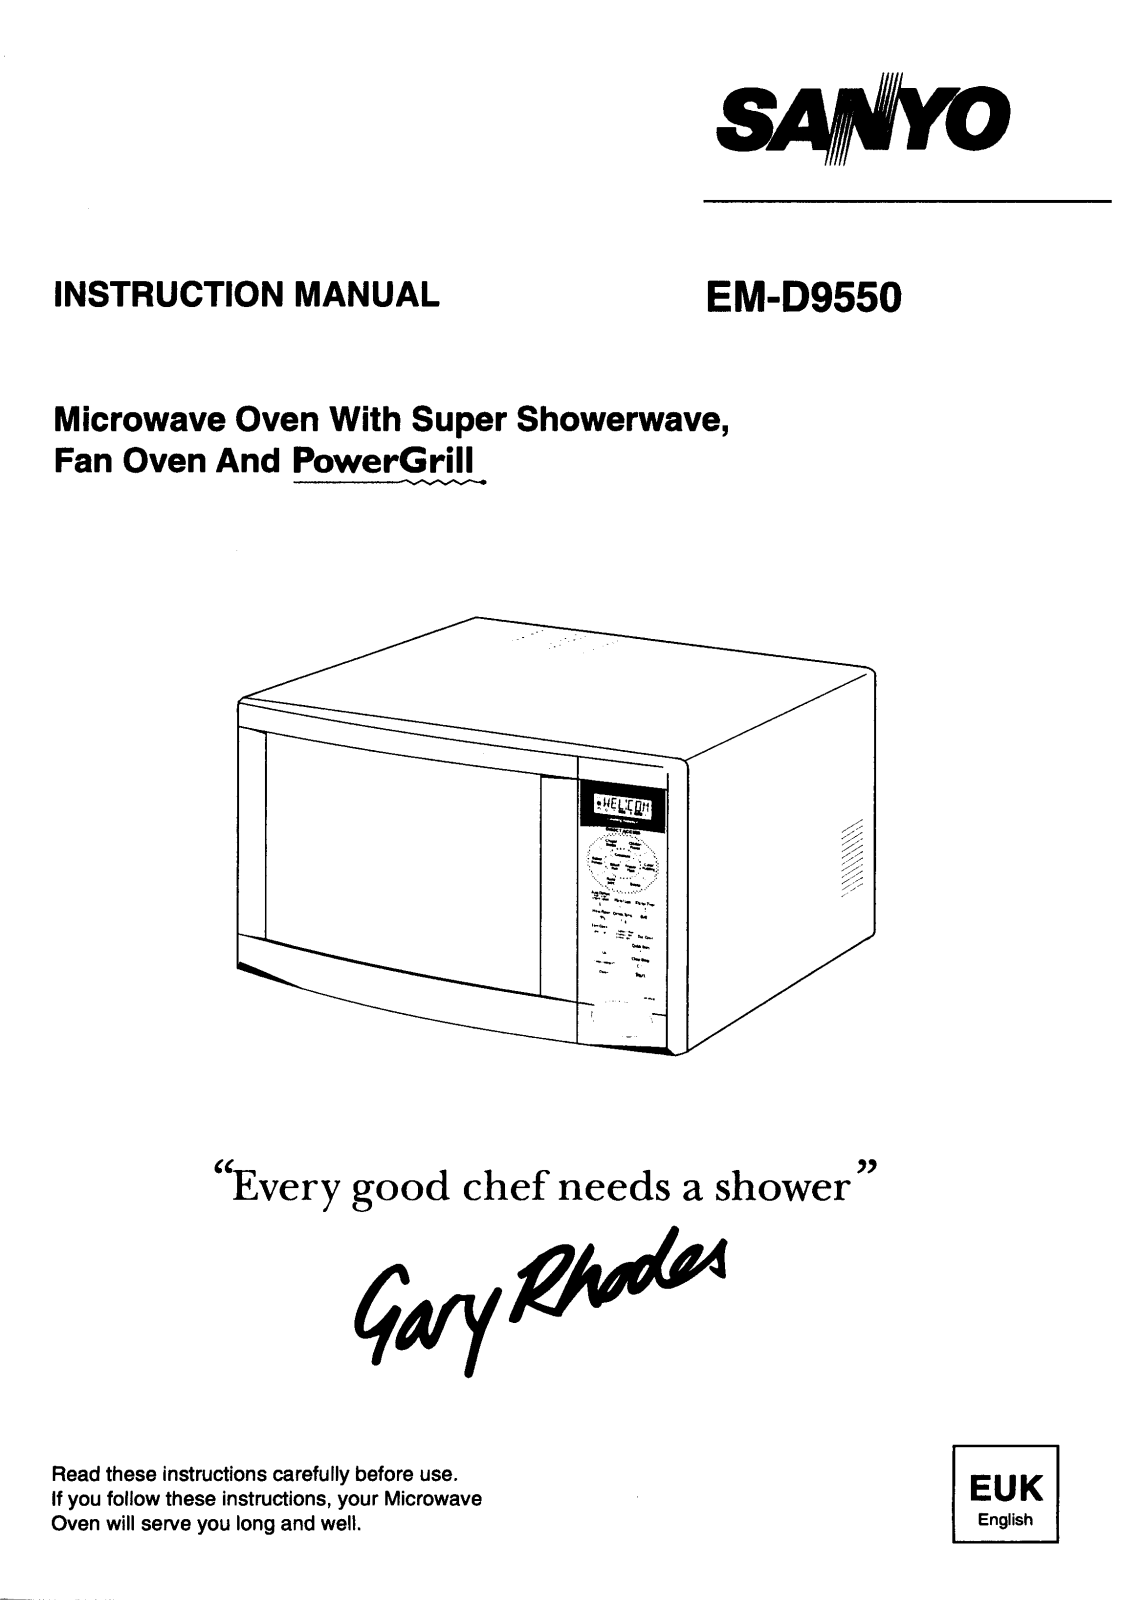 Sanyo EM-D9550 Instruction Manual